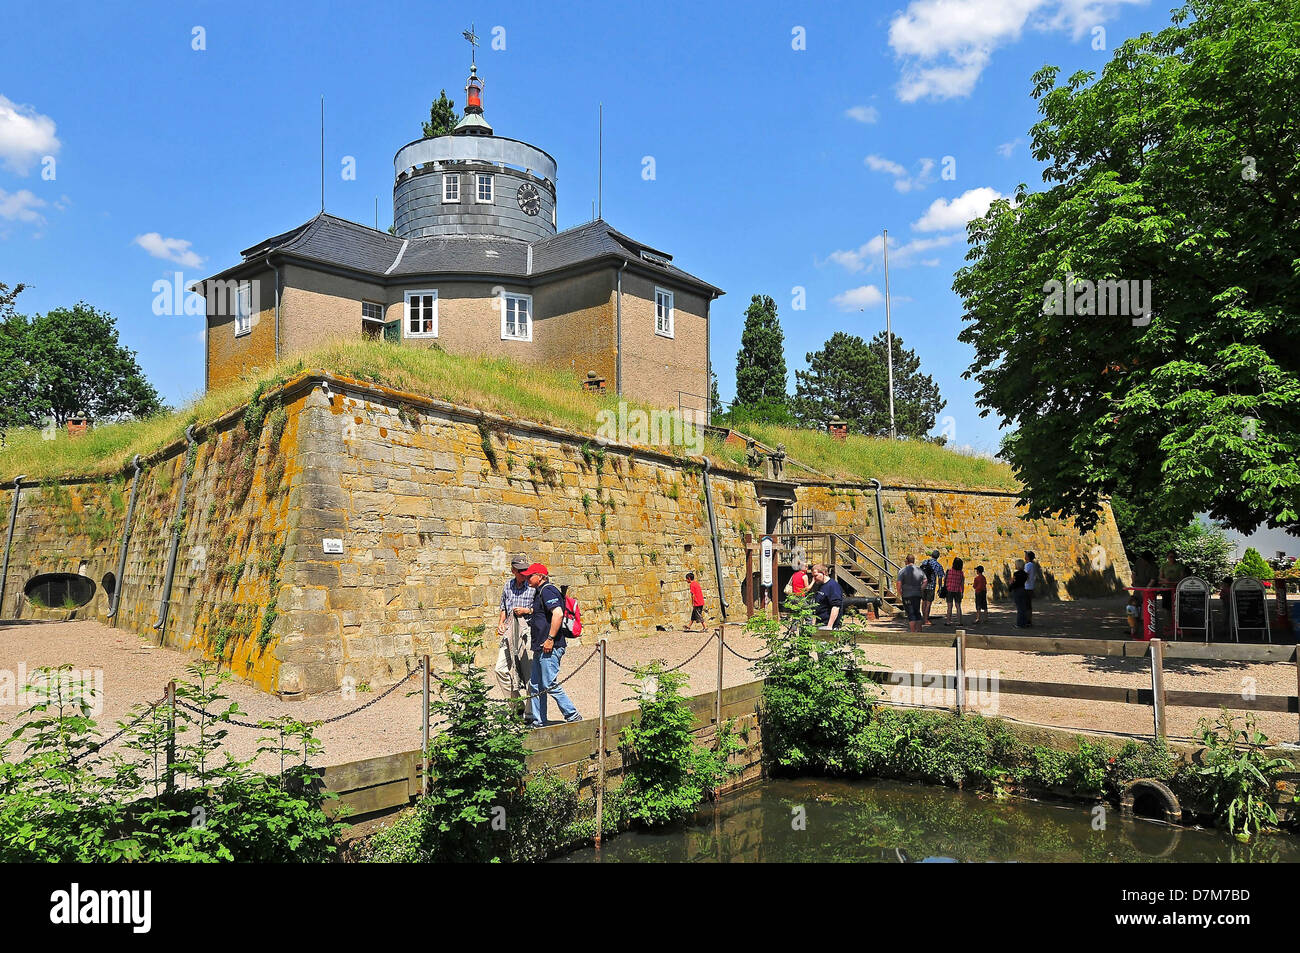 castle of Steinhude, Germany, Wunstorf, Lower Saxony Stock Photo